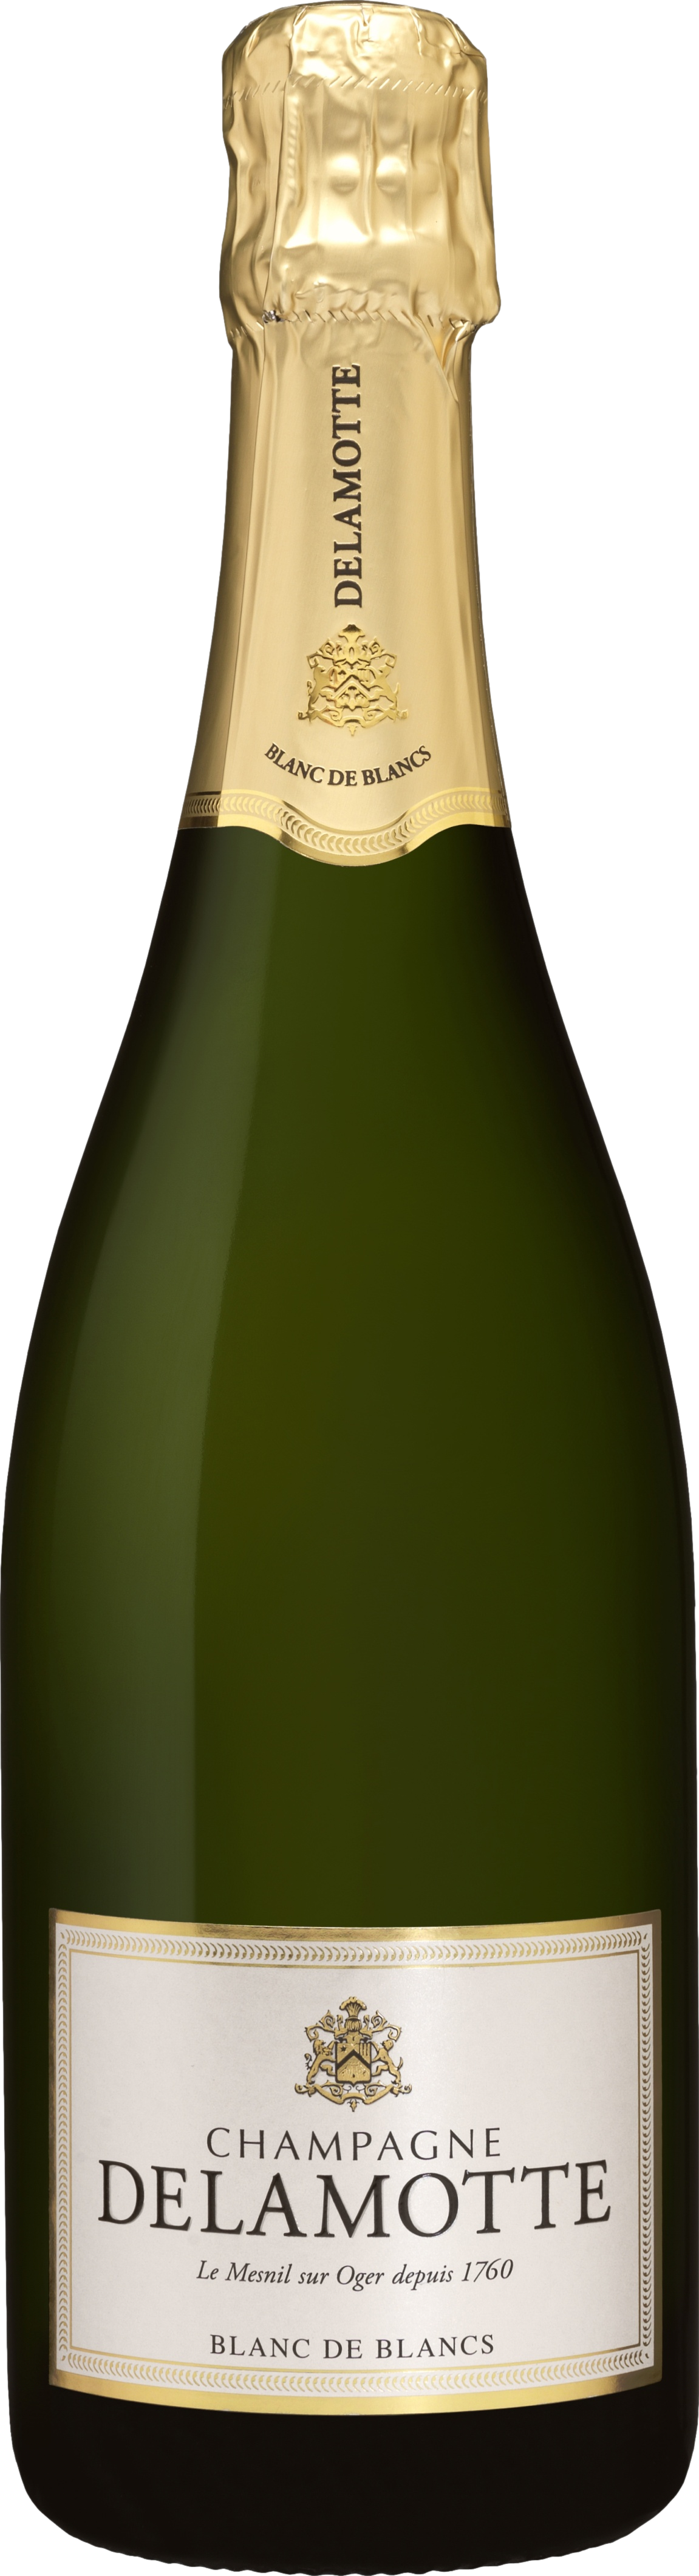 Champagne Delamotte Blanc de Blancs Brut 2018